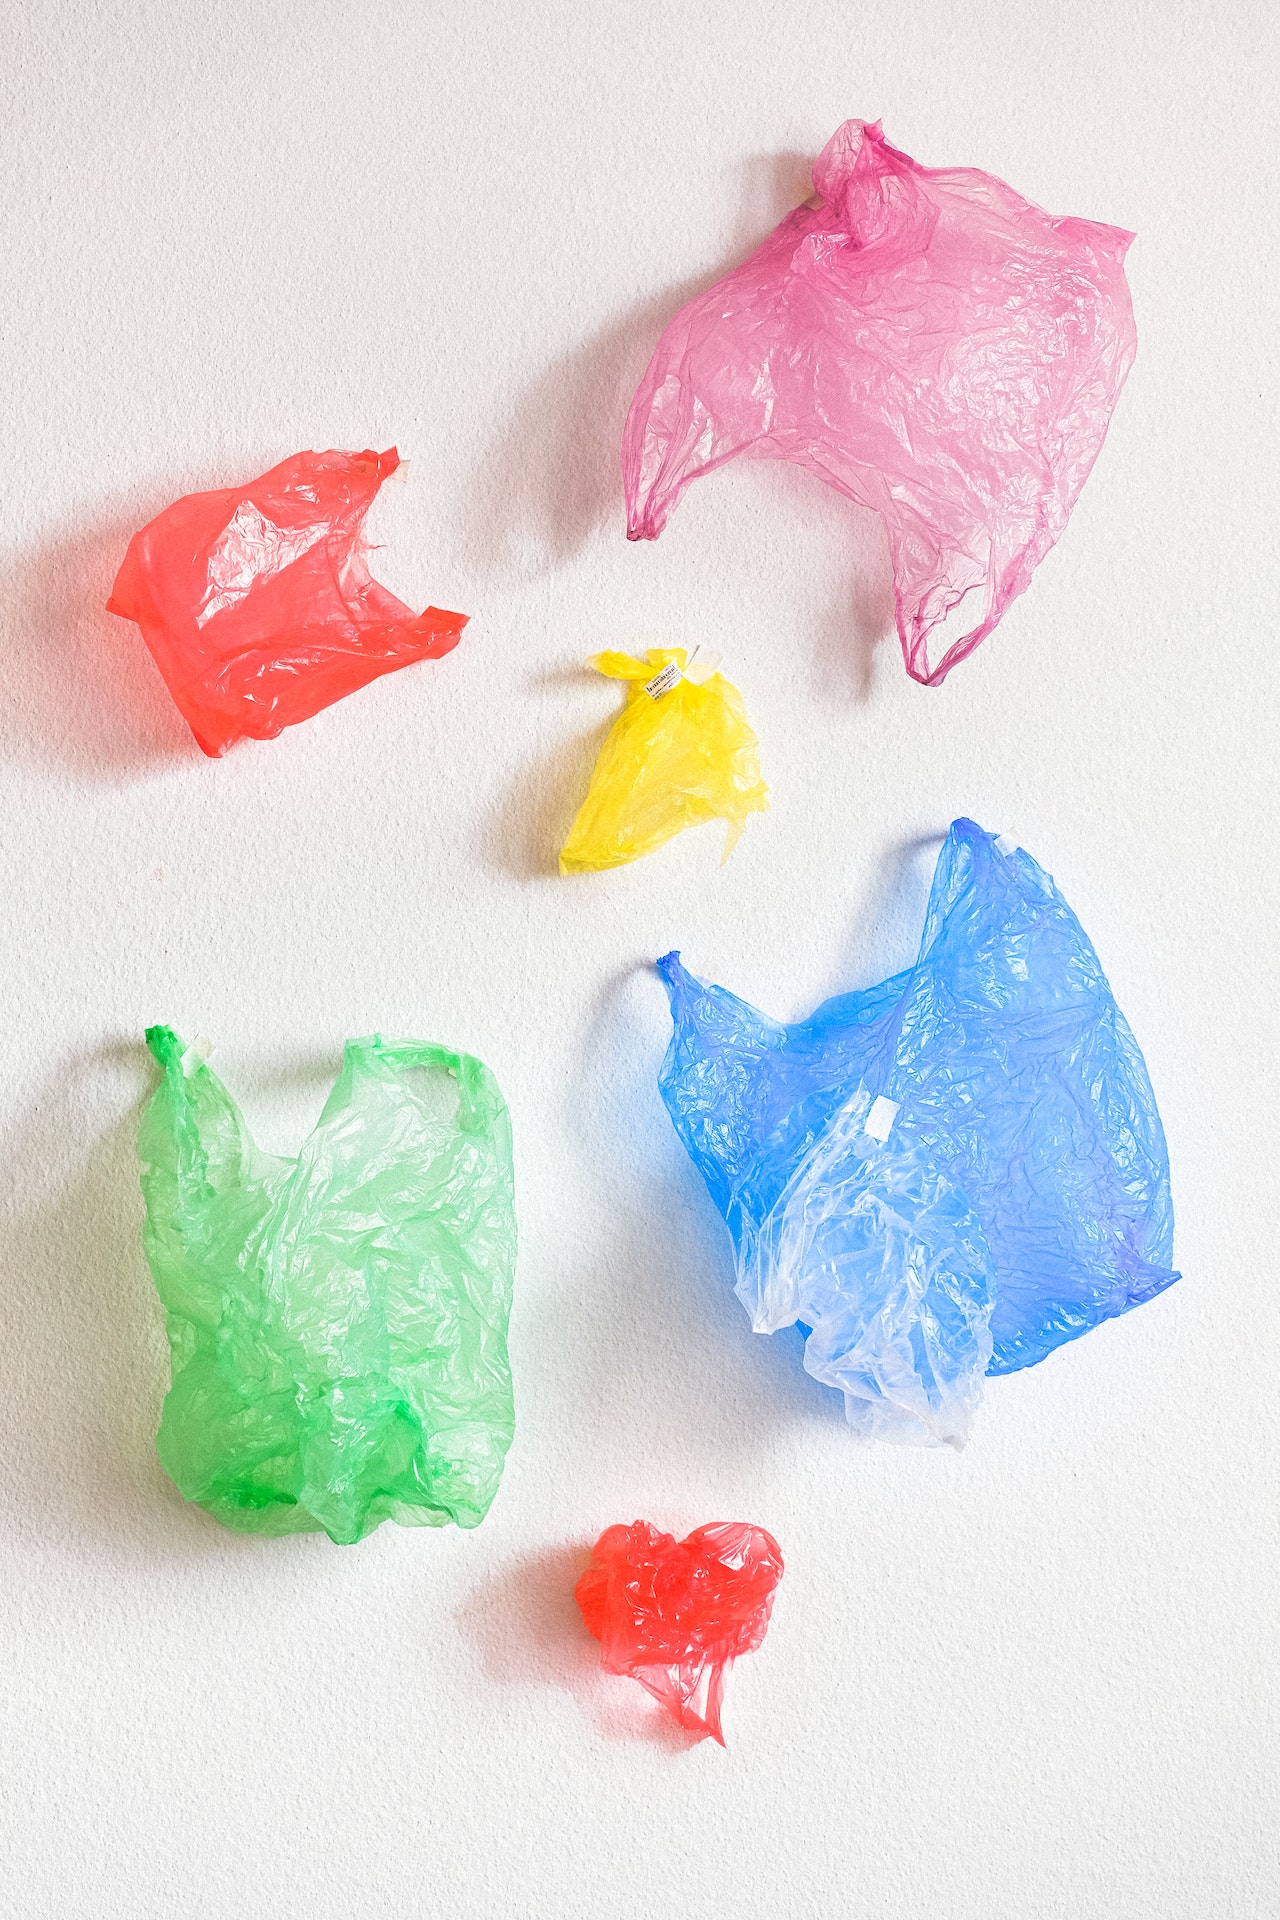 EU Ministers block plastic bag waste progress